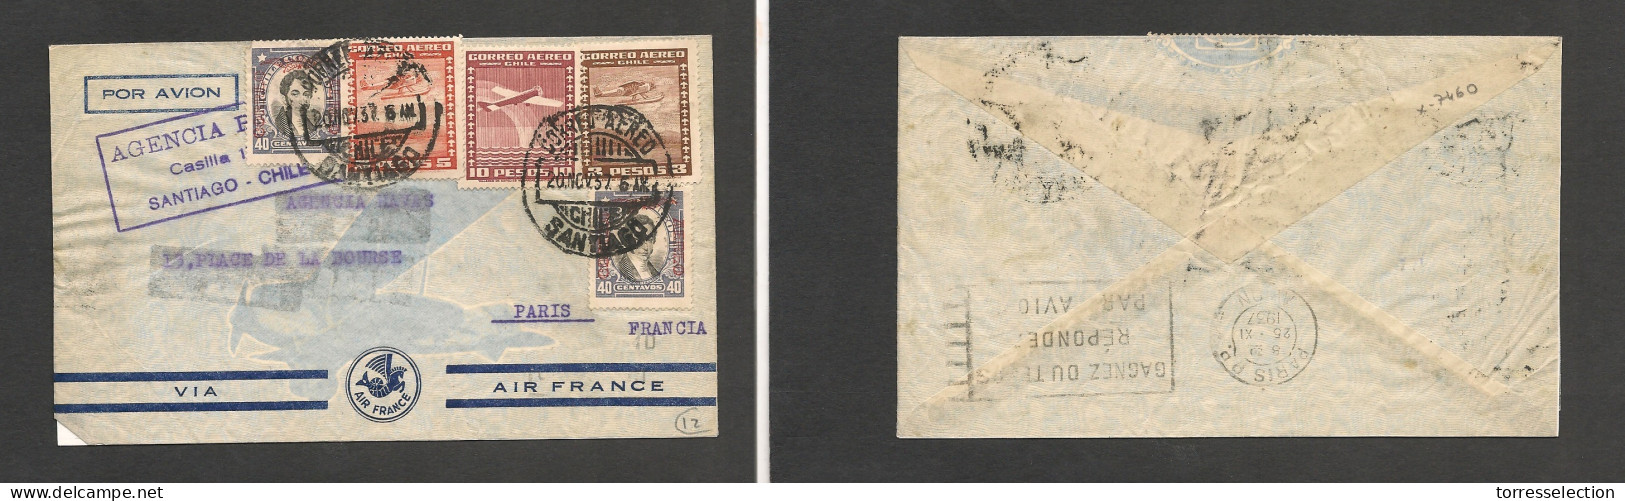 CHILE. Chile - Cover - 1937 20 Nov Stgo To France Paris Air Mult Fkd Env Via Air France Printed Env Rate 18.80$.  $Ex-Pr - Chile